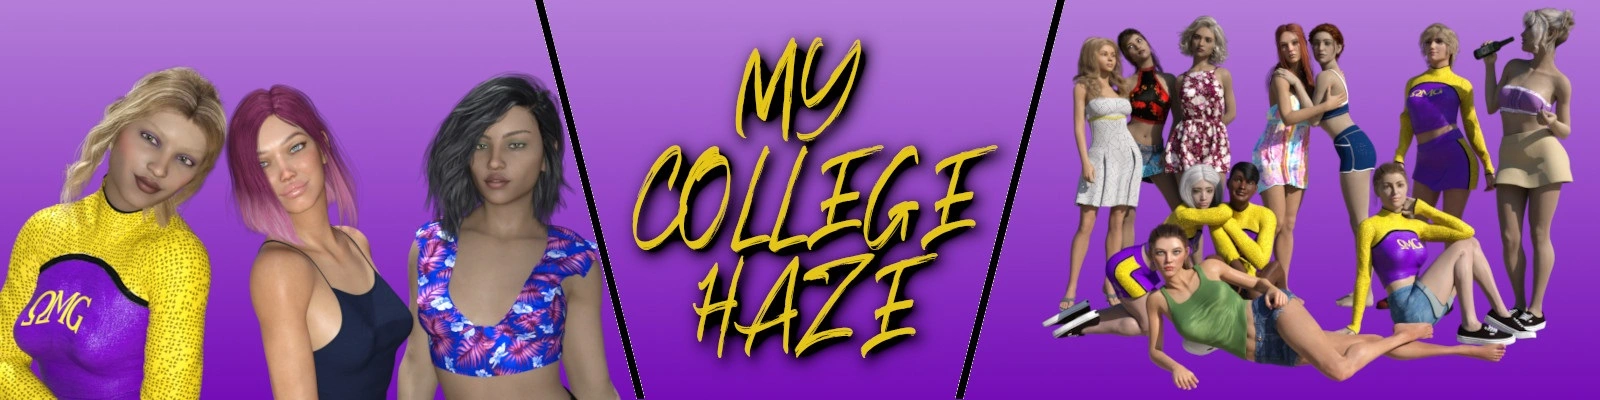 My College Haze [v0.1.1] main image